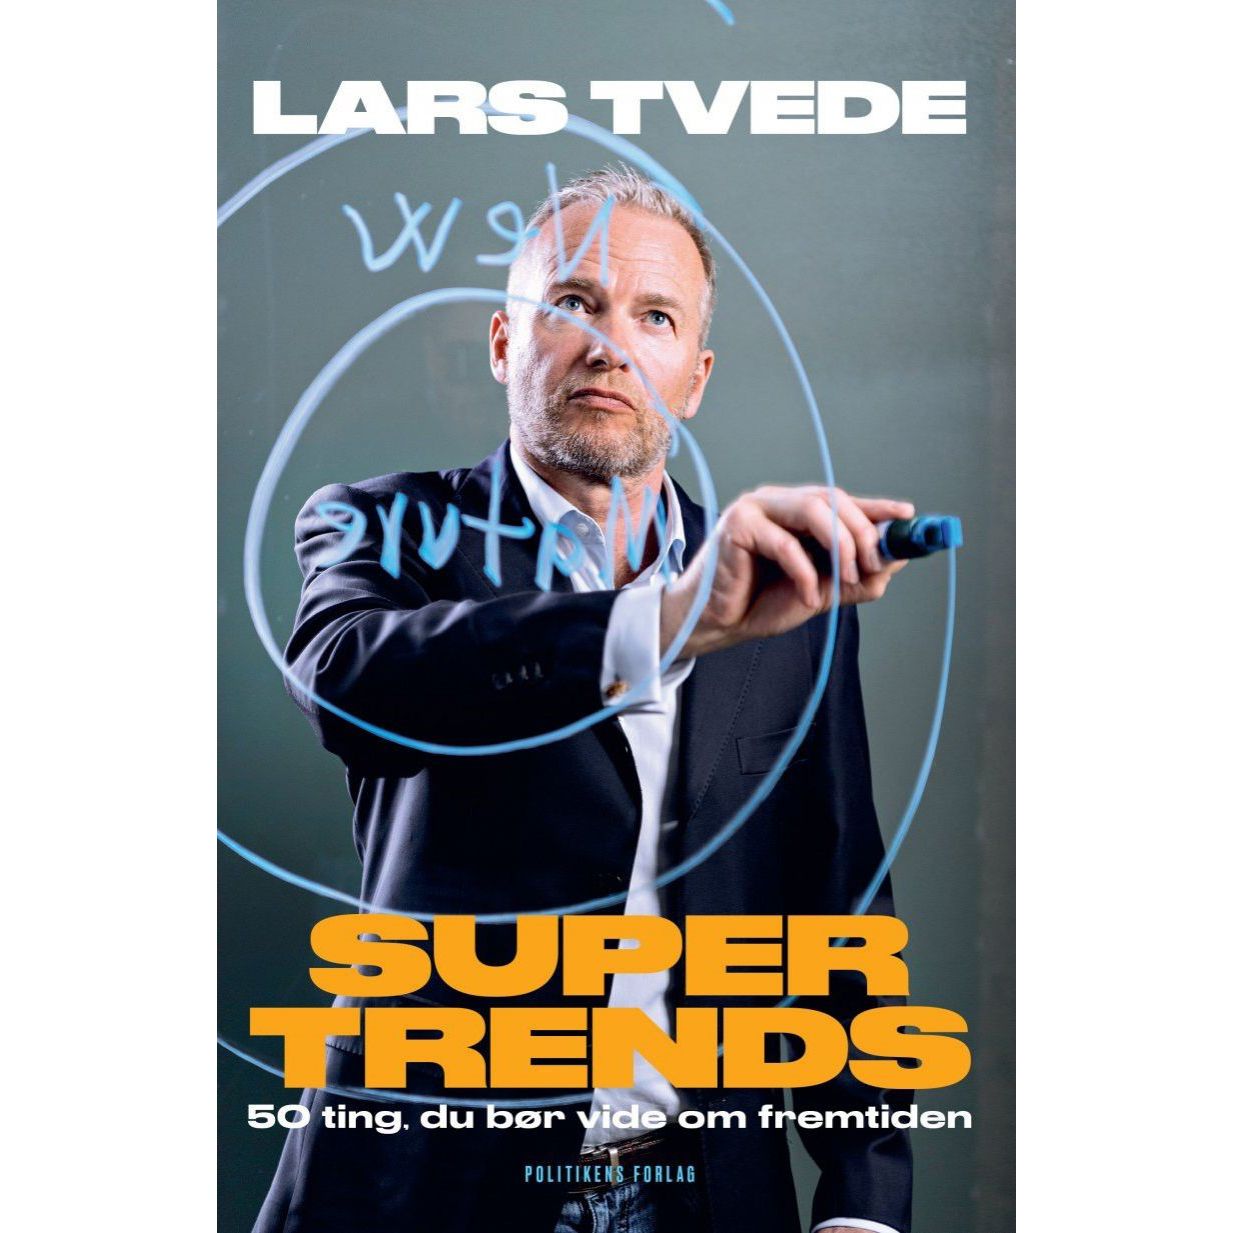 — Lars Tvede (Serial entrepreneur, investor and multimillionaire)